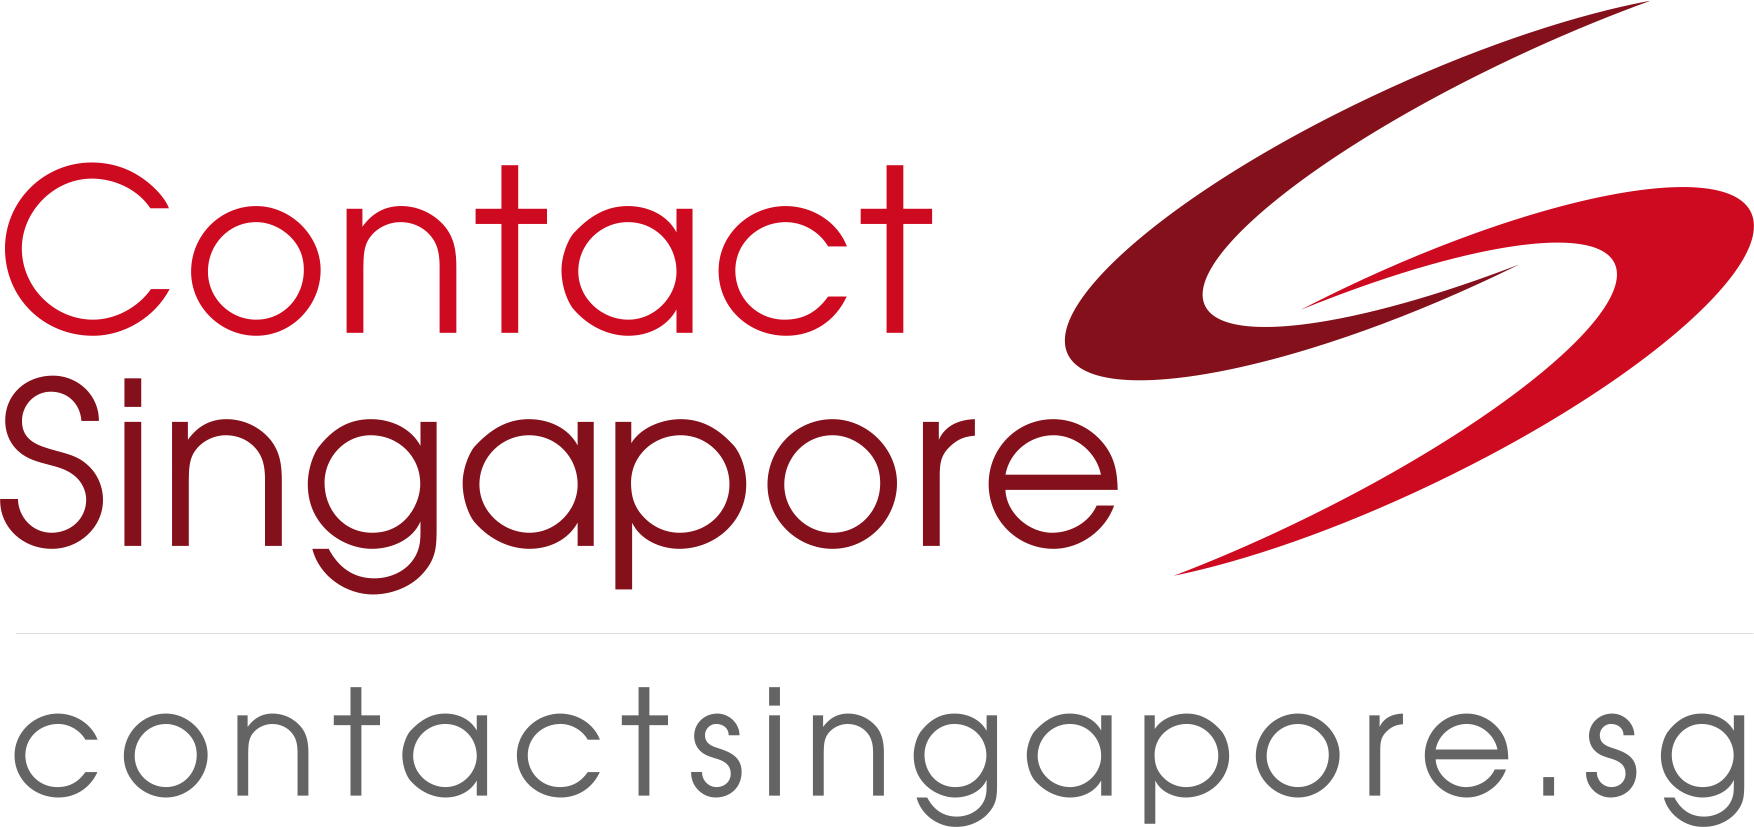 Contact Singapore